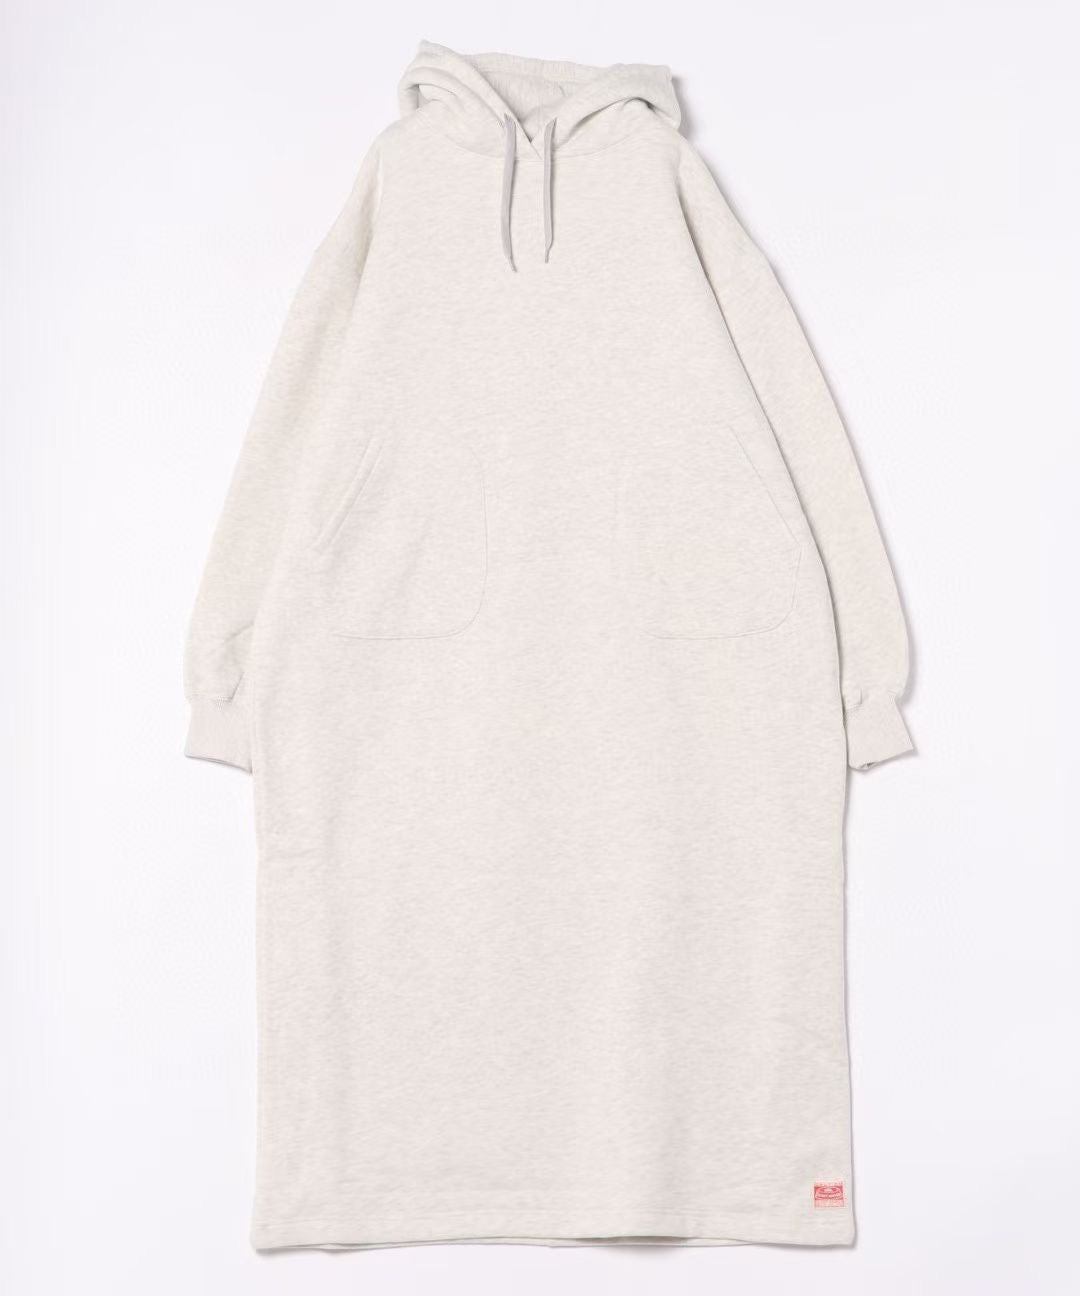 CVA hoodies one piece